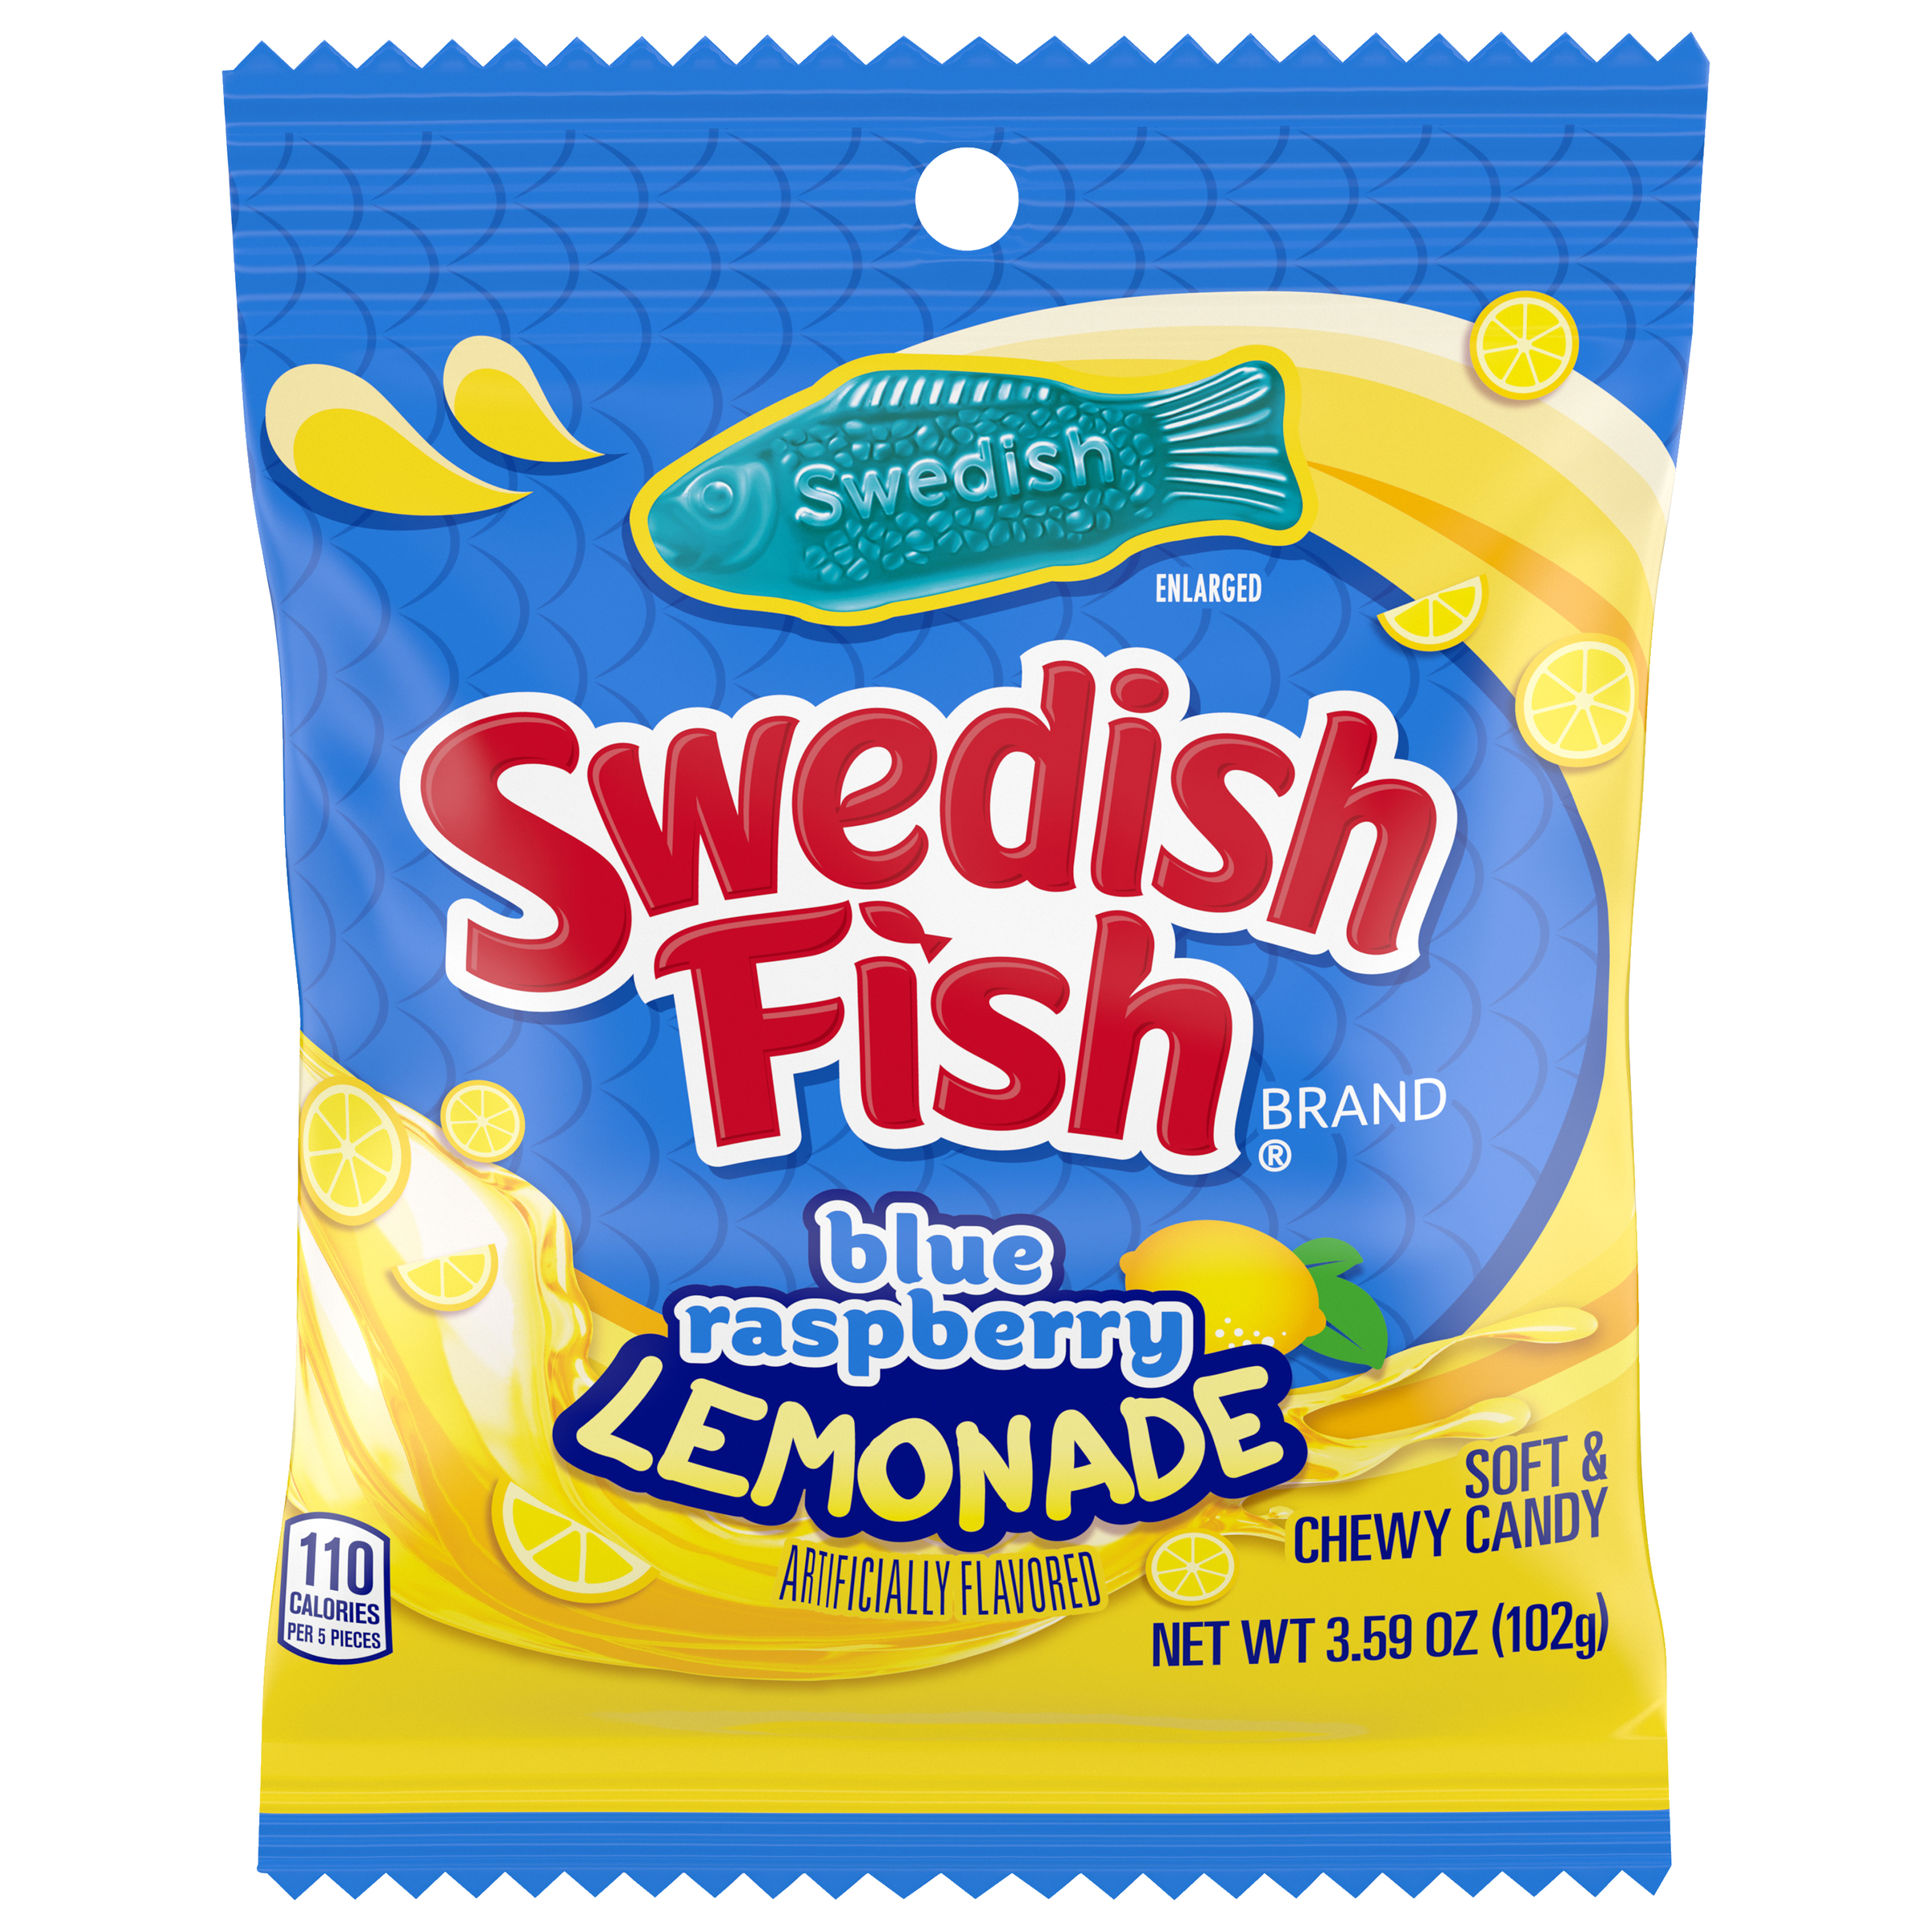 SWEDISH FISH Blue Raspberry Lemonade Soft & Chewy Candy, 3.59 oz Bag